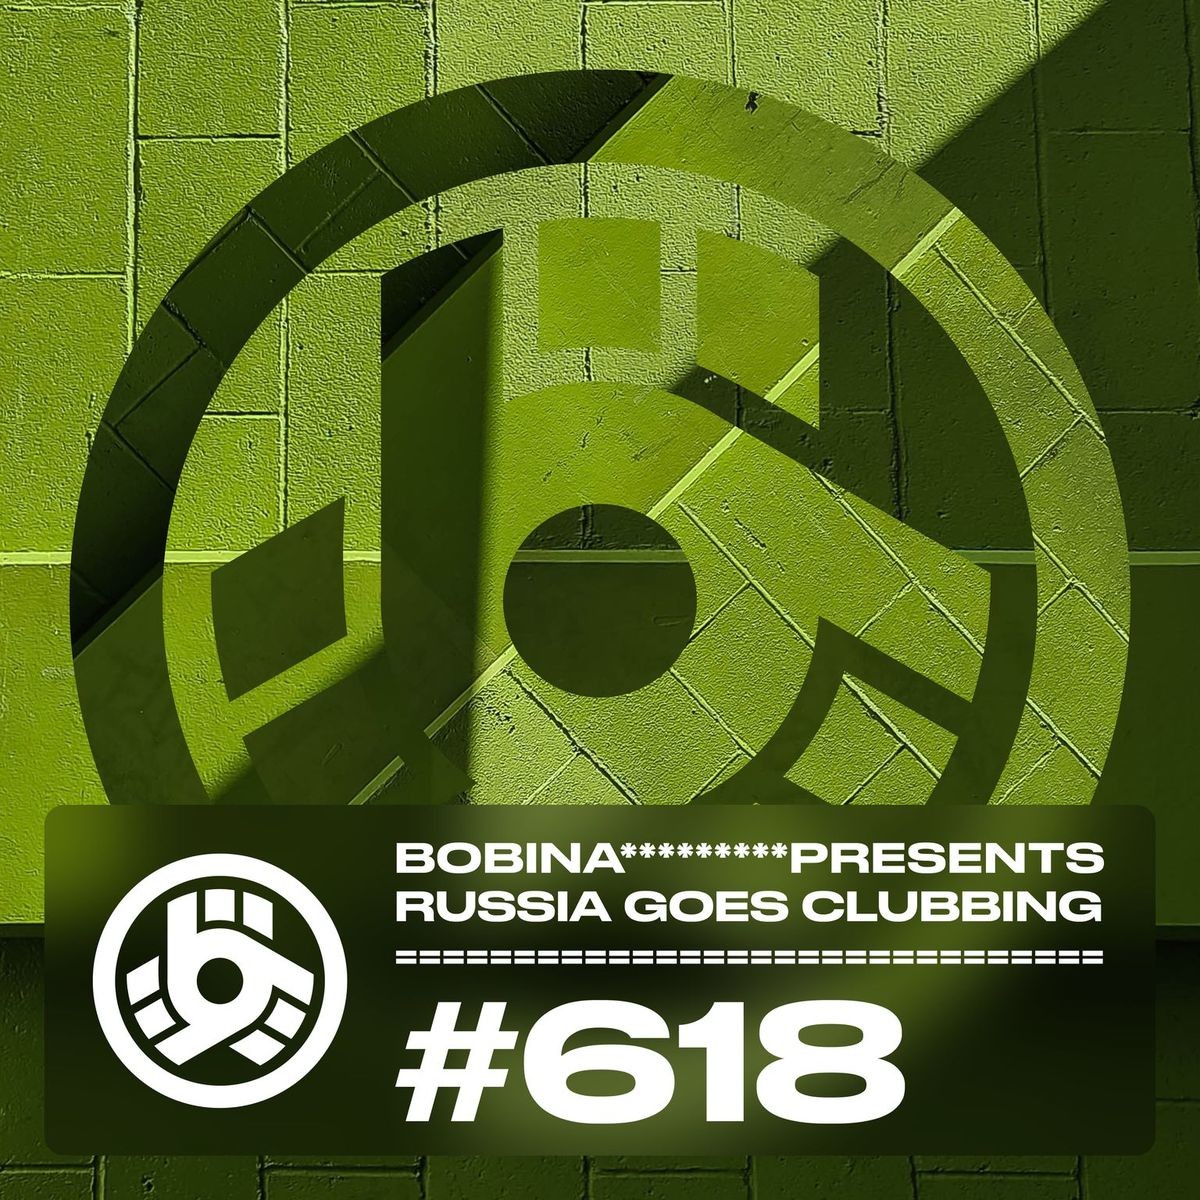 Russia Goes Clubbing #618